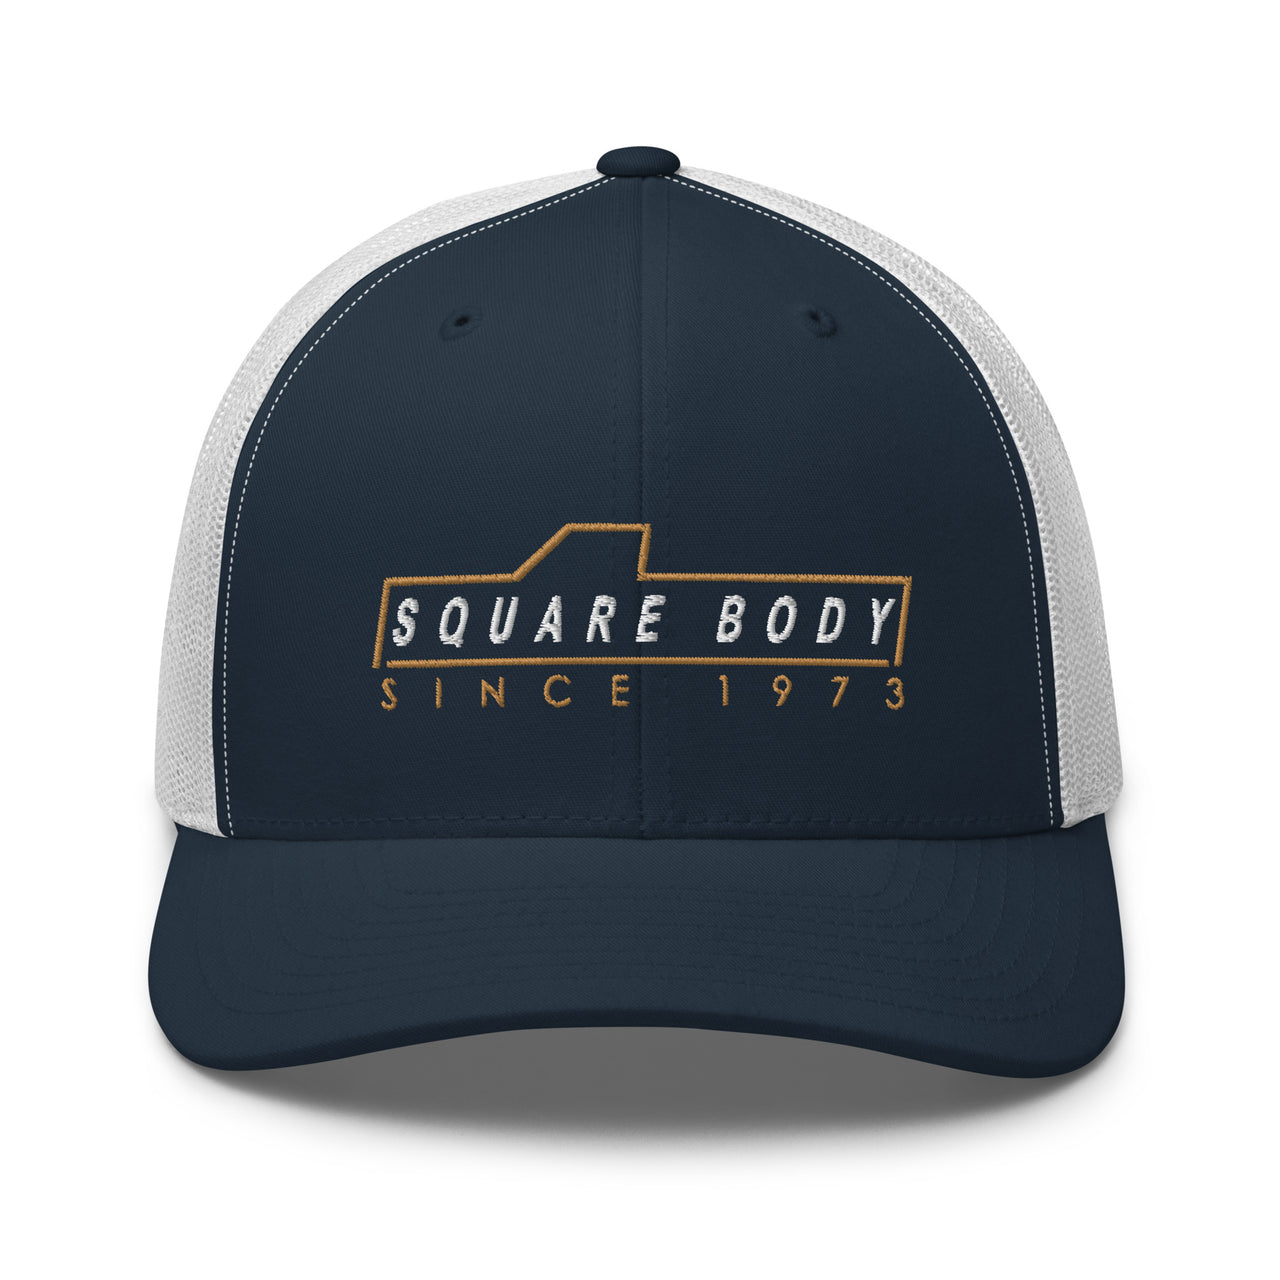 square body trucker hat in navy and white - Aggressive Thread Auto Apparel